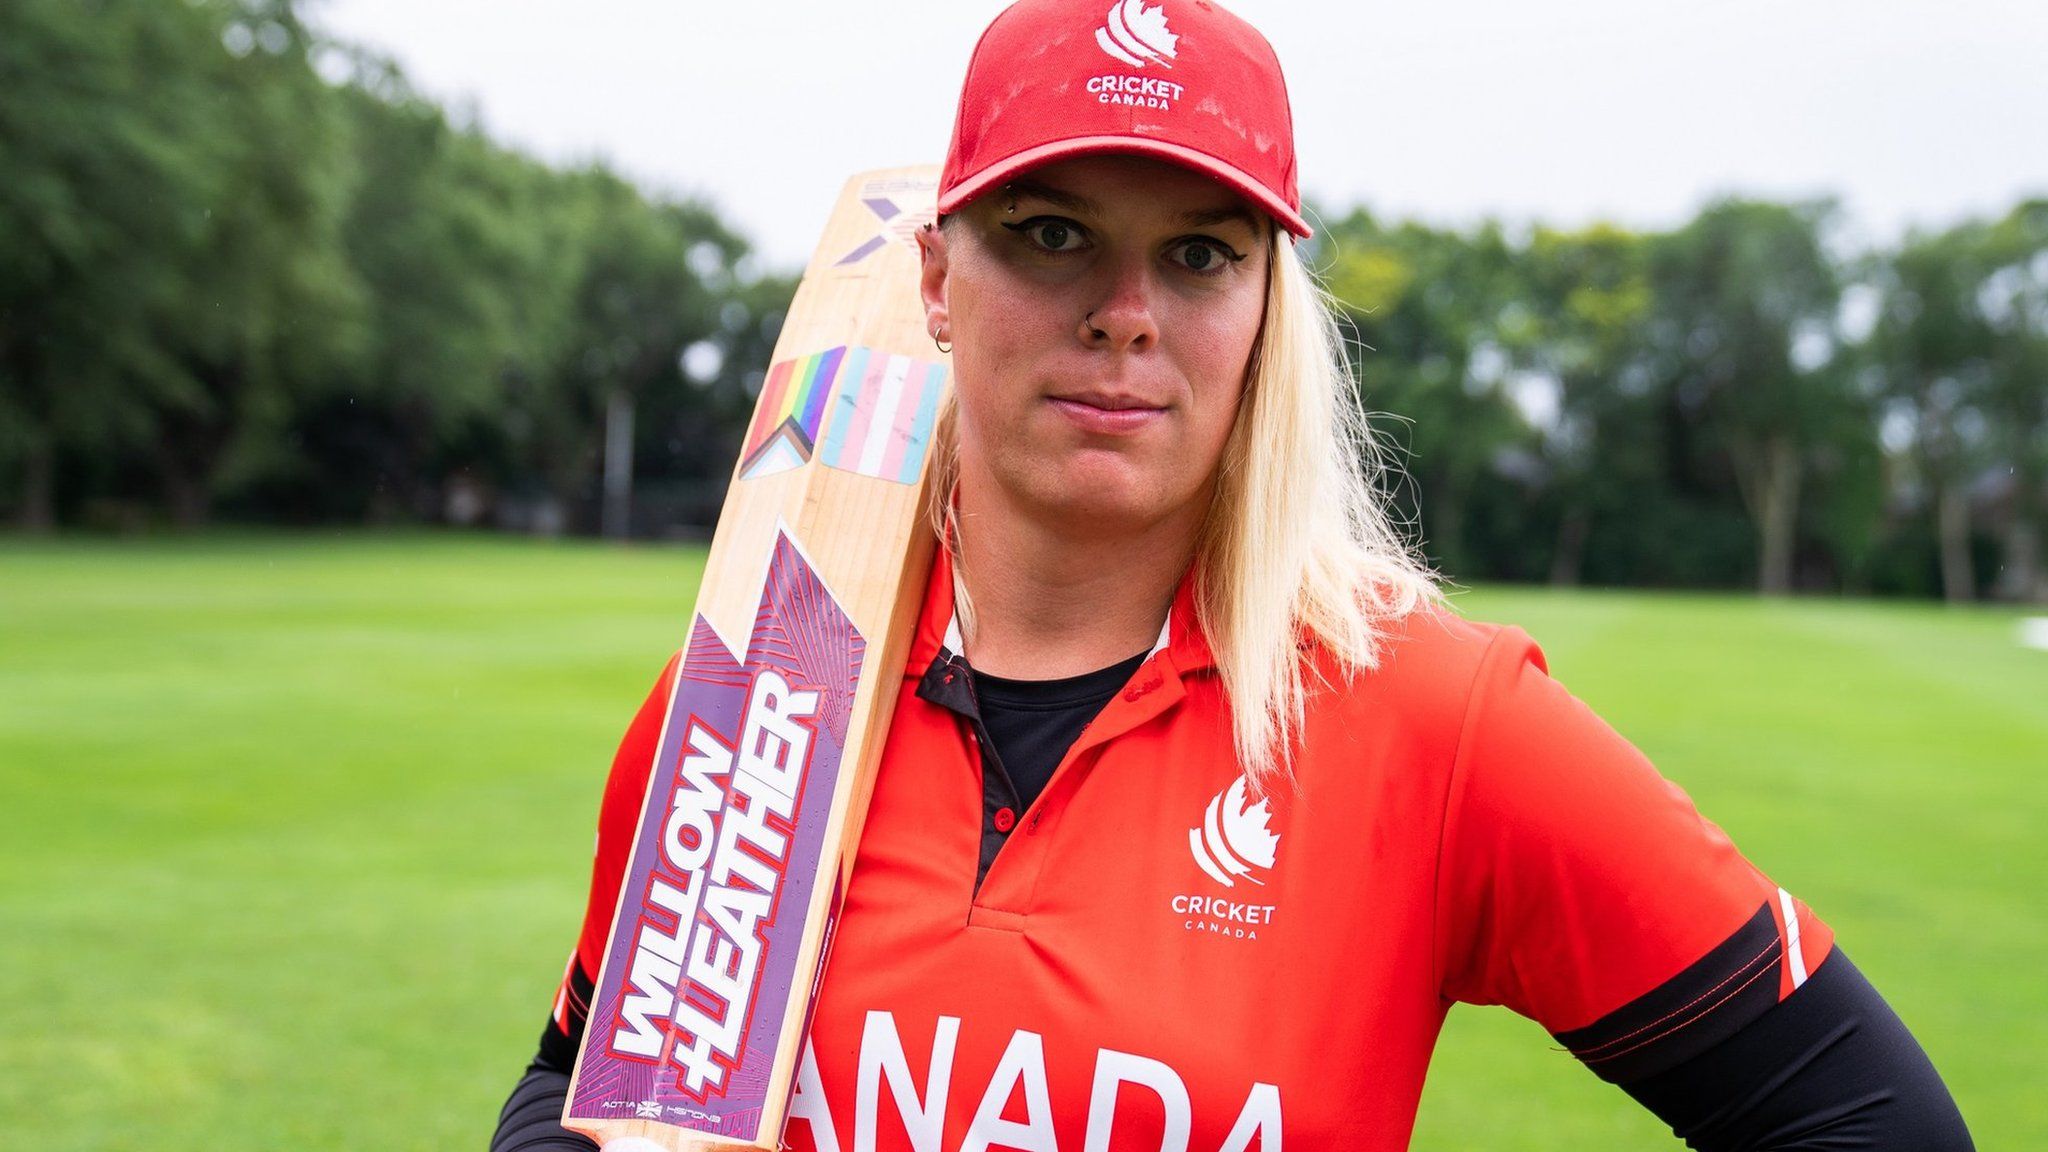 Canadian transgender woman cricketer Danielle McGahey